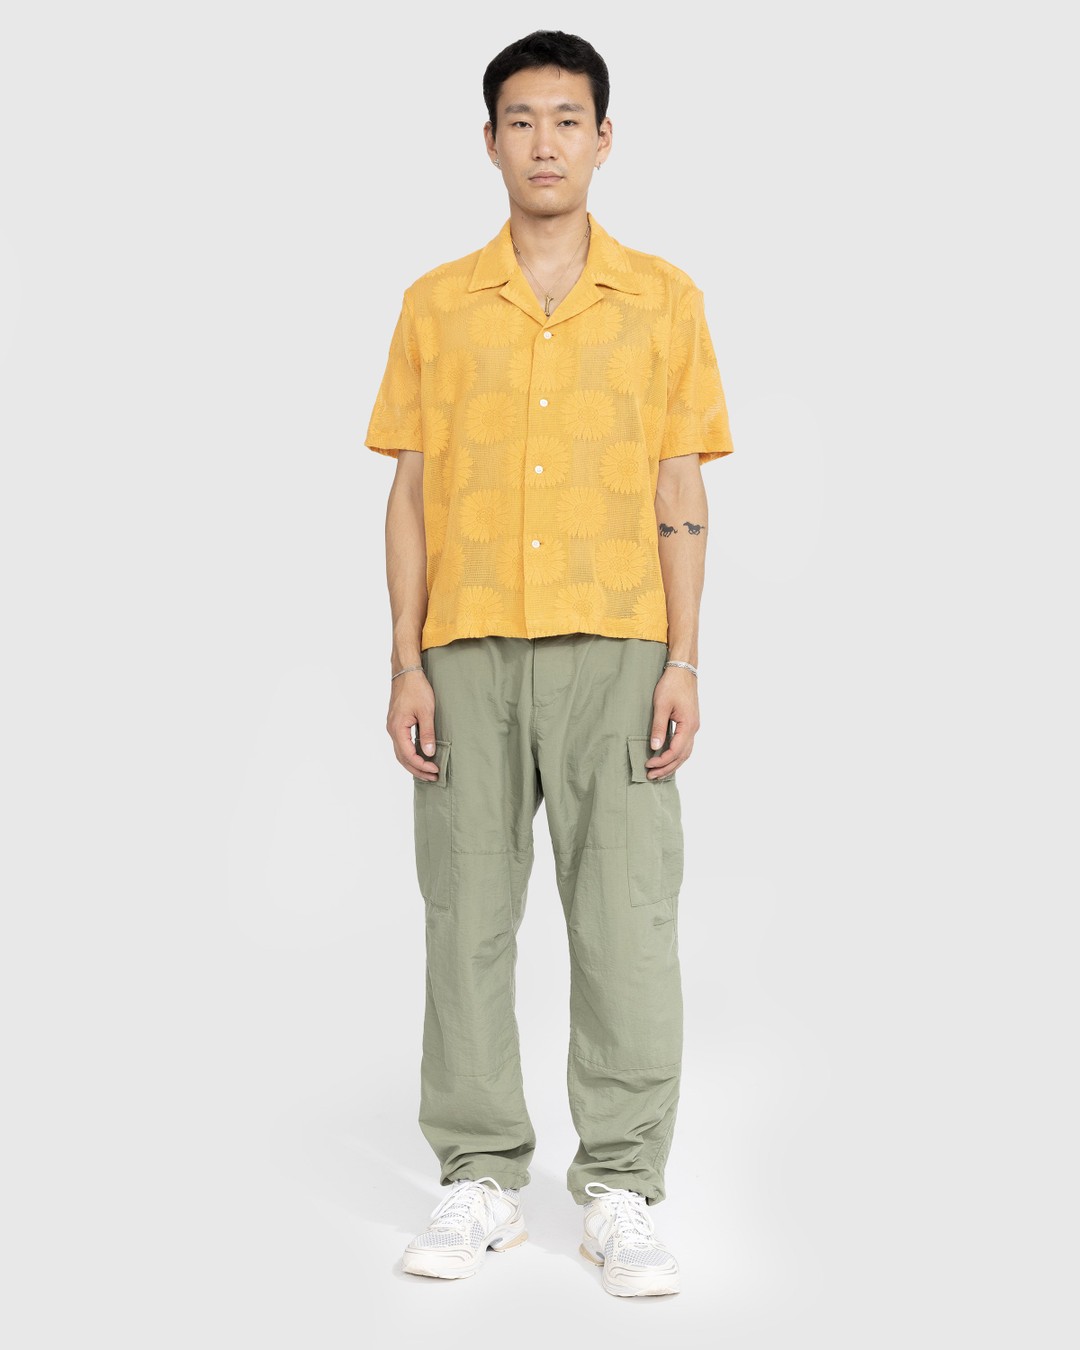 Bode – Sunflower Lace Shortsleeve Shirt Yellow  - Shirts - Yellow - Image 2